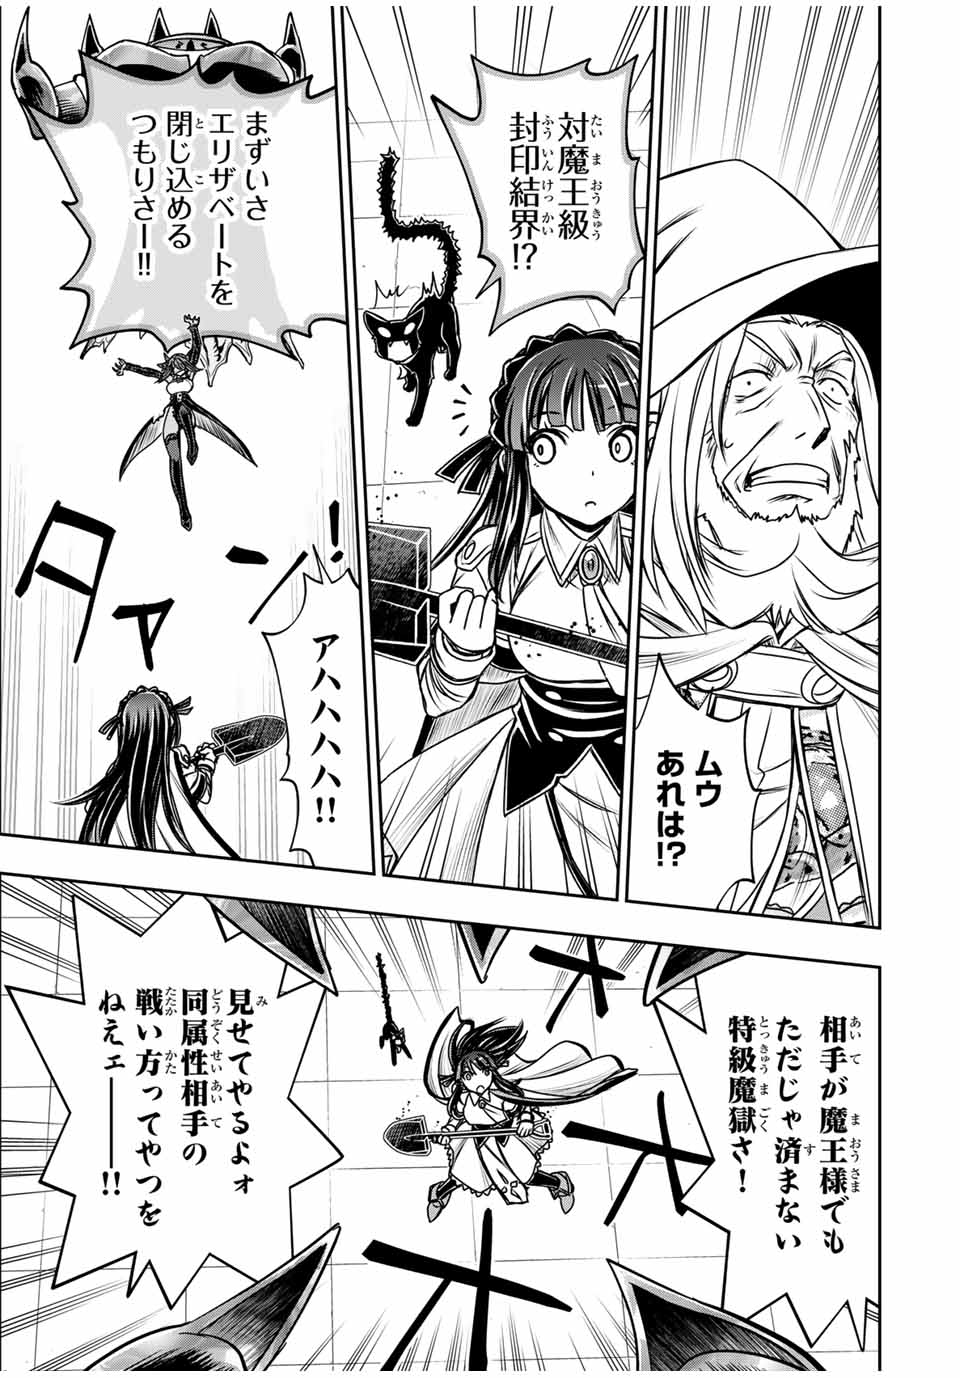 Nengan no Akuyaku Reijou (Last Boss) no Karada wo Teniiretazo!  - Chapter 27 - Page 5